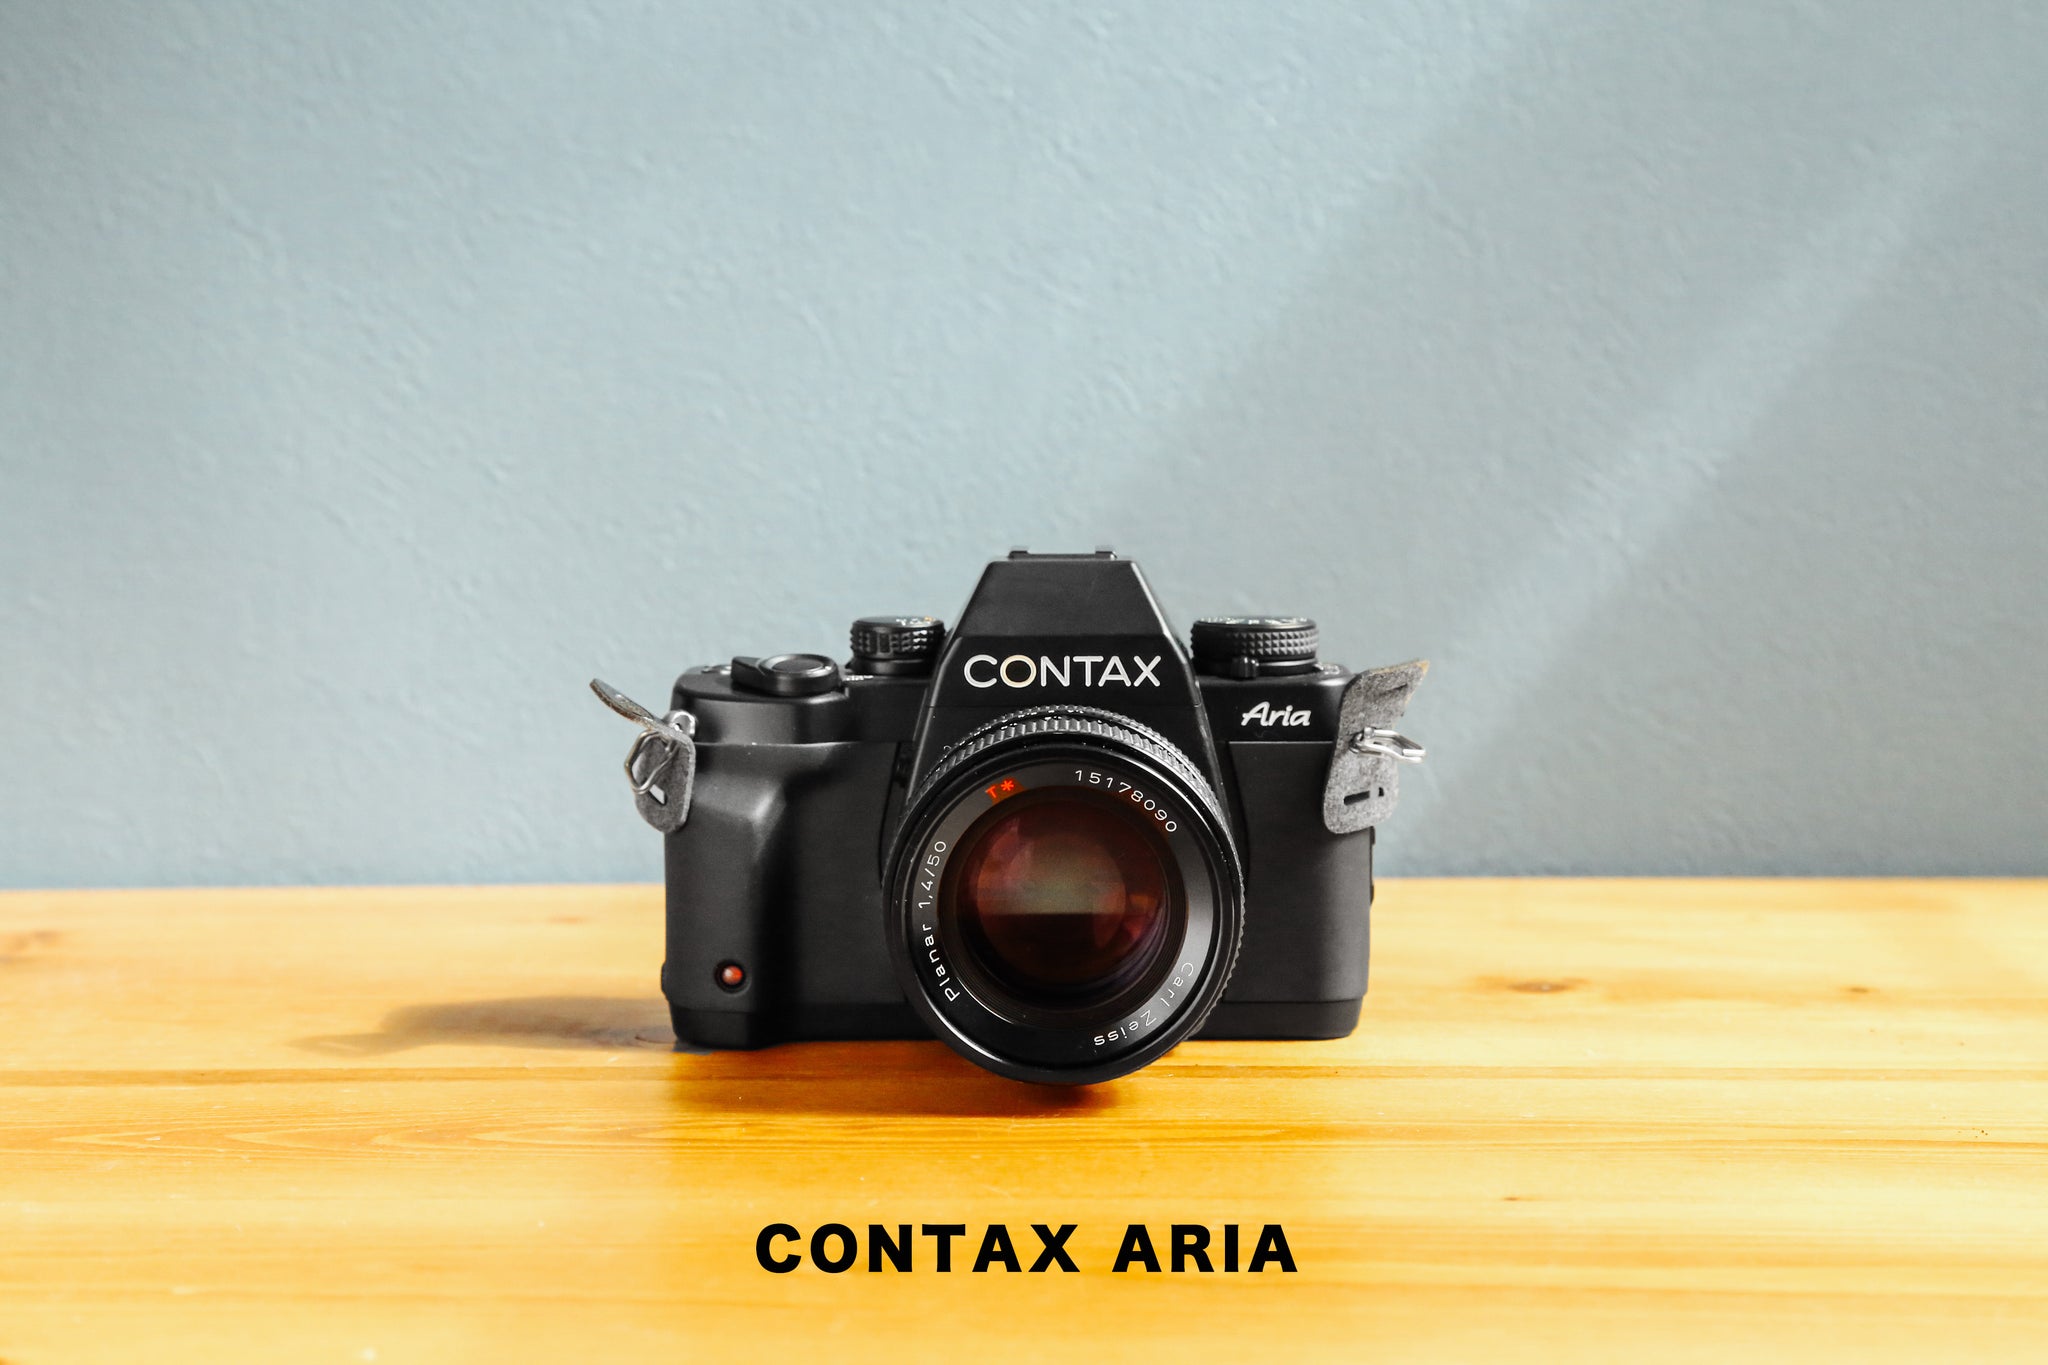 coxtax aria コンタックスアリア フィルムカメラcoxtaxa